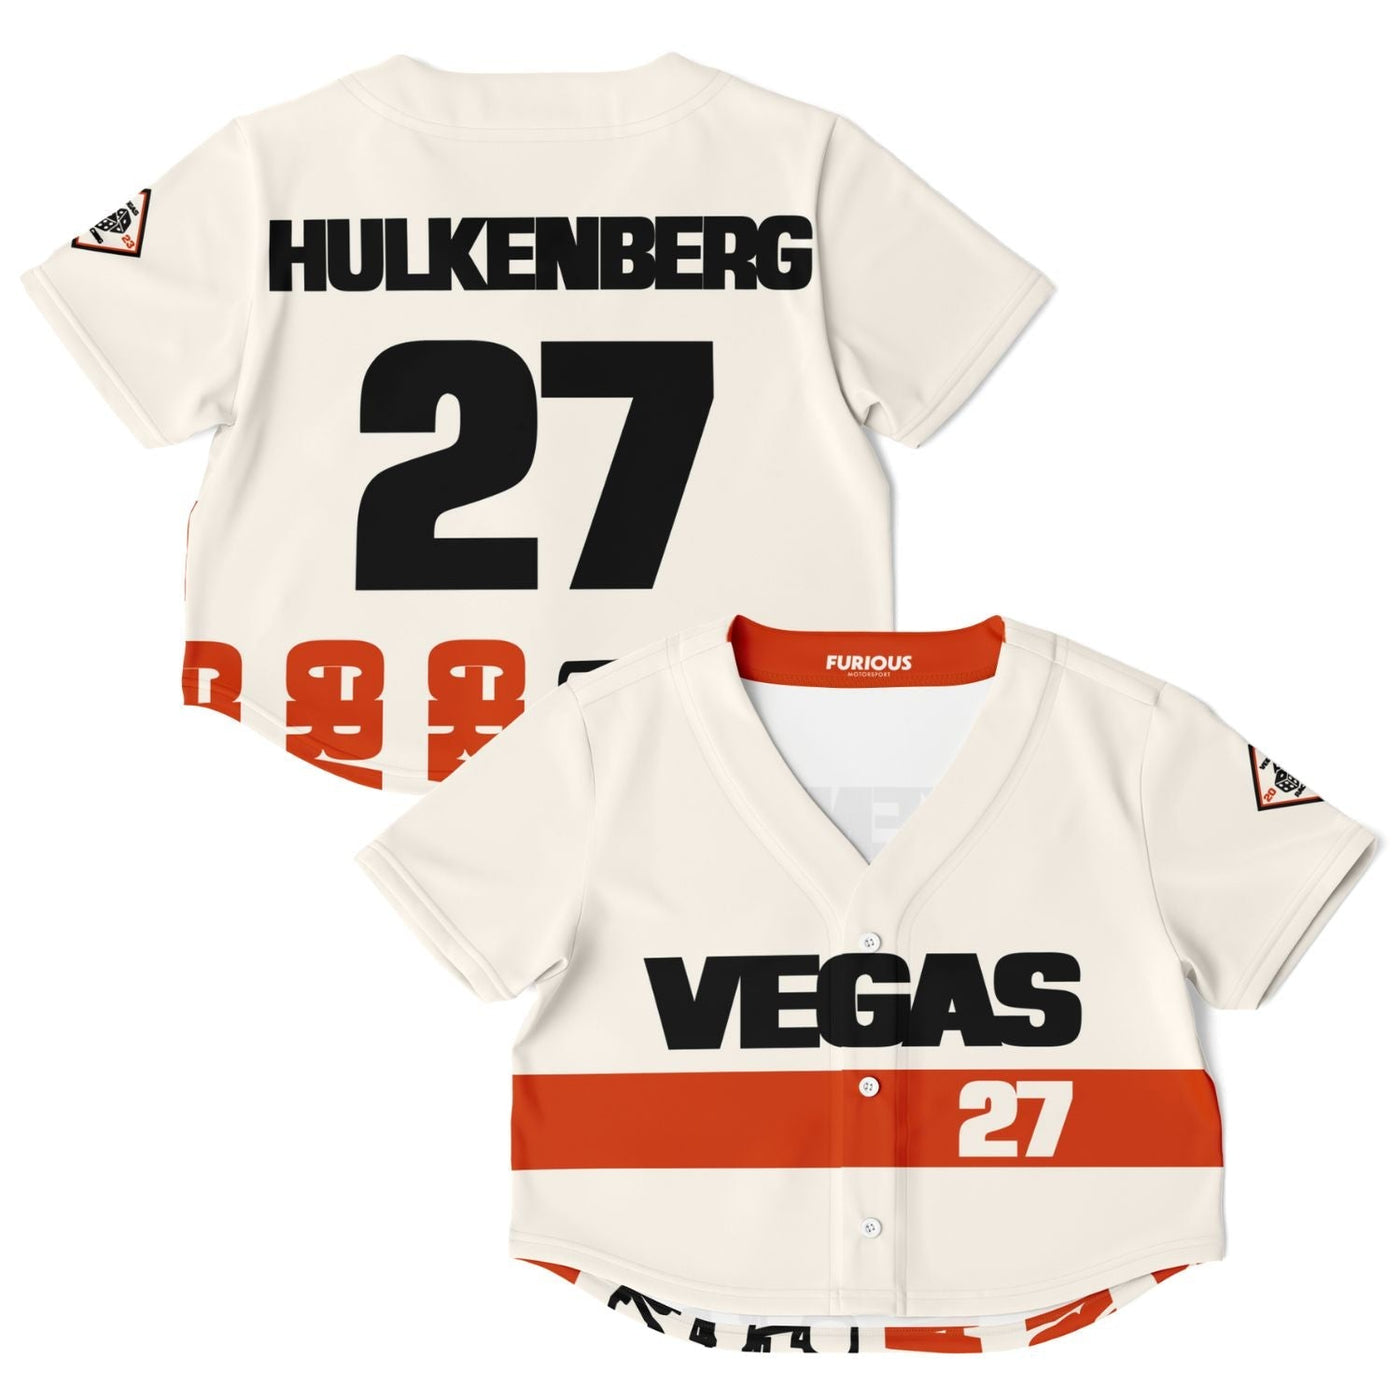 Hulkenberg - Vegas Street Circuit Crop Top (Clearance) - Furious Motorsport